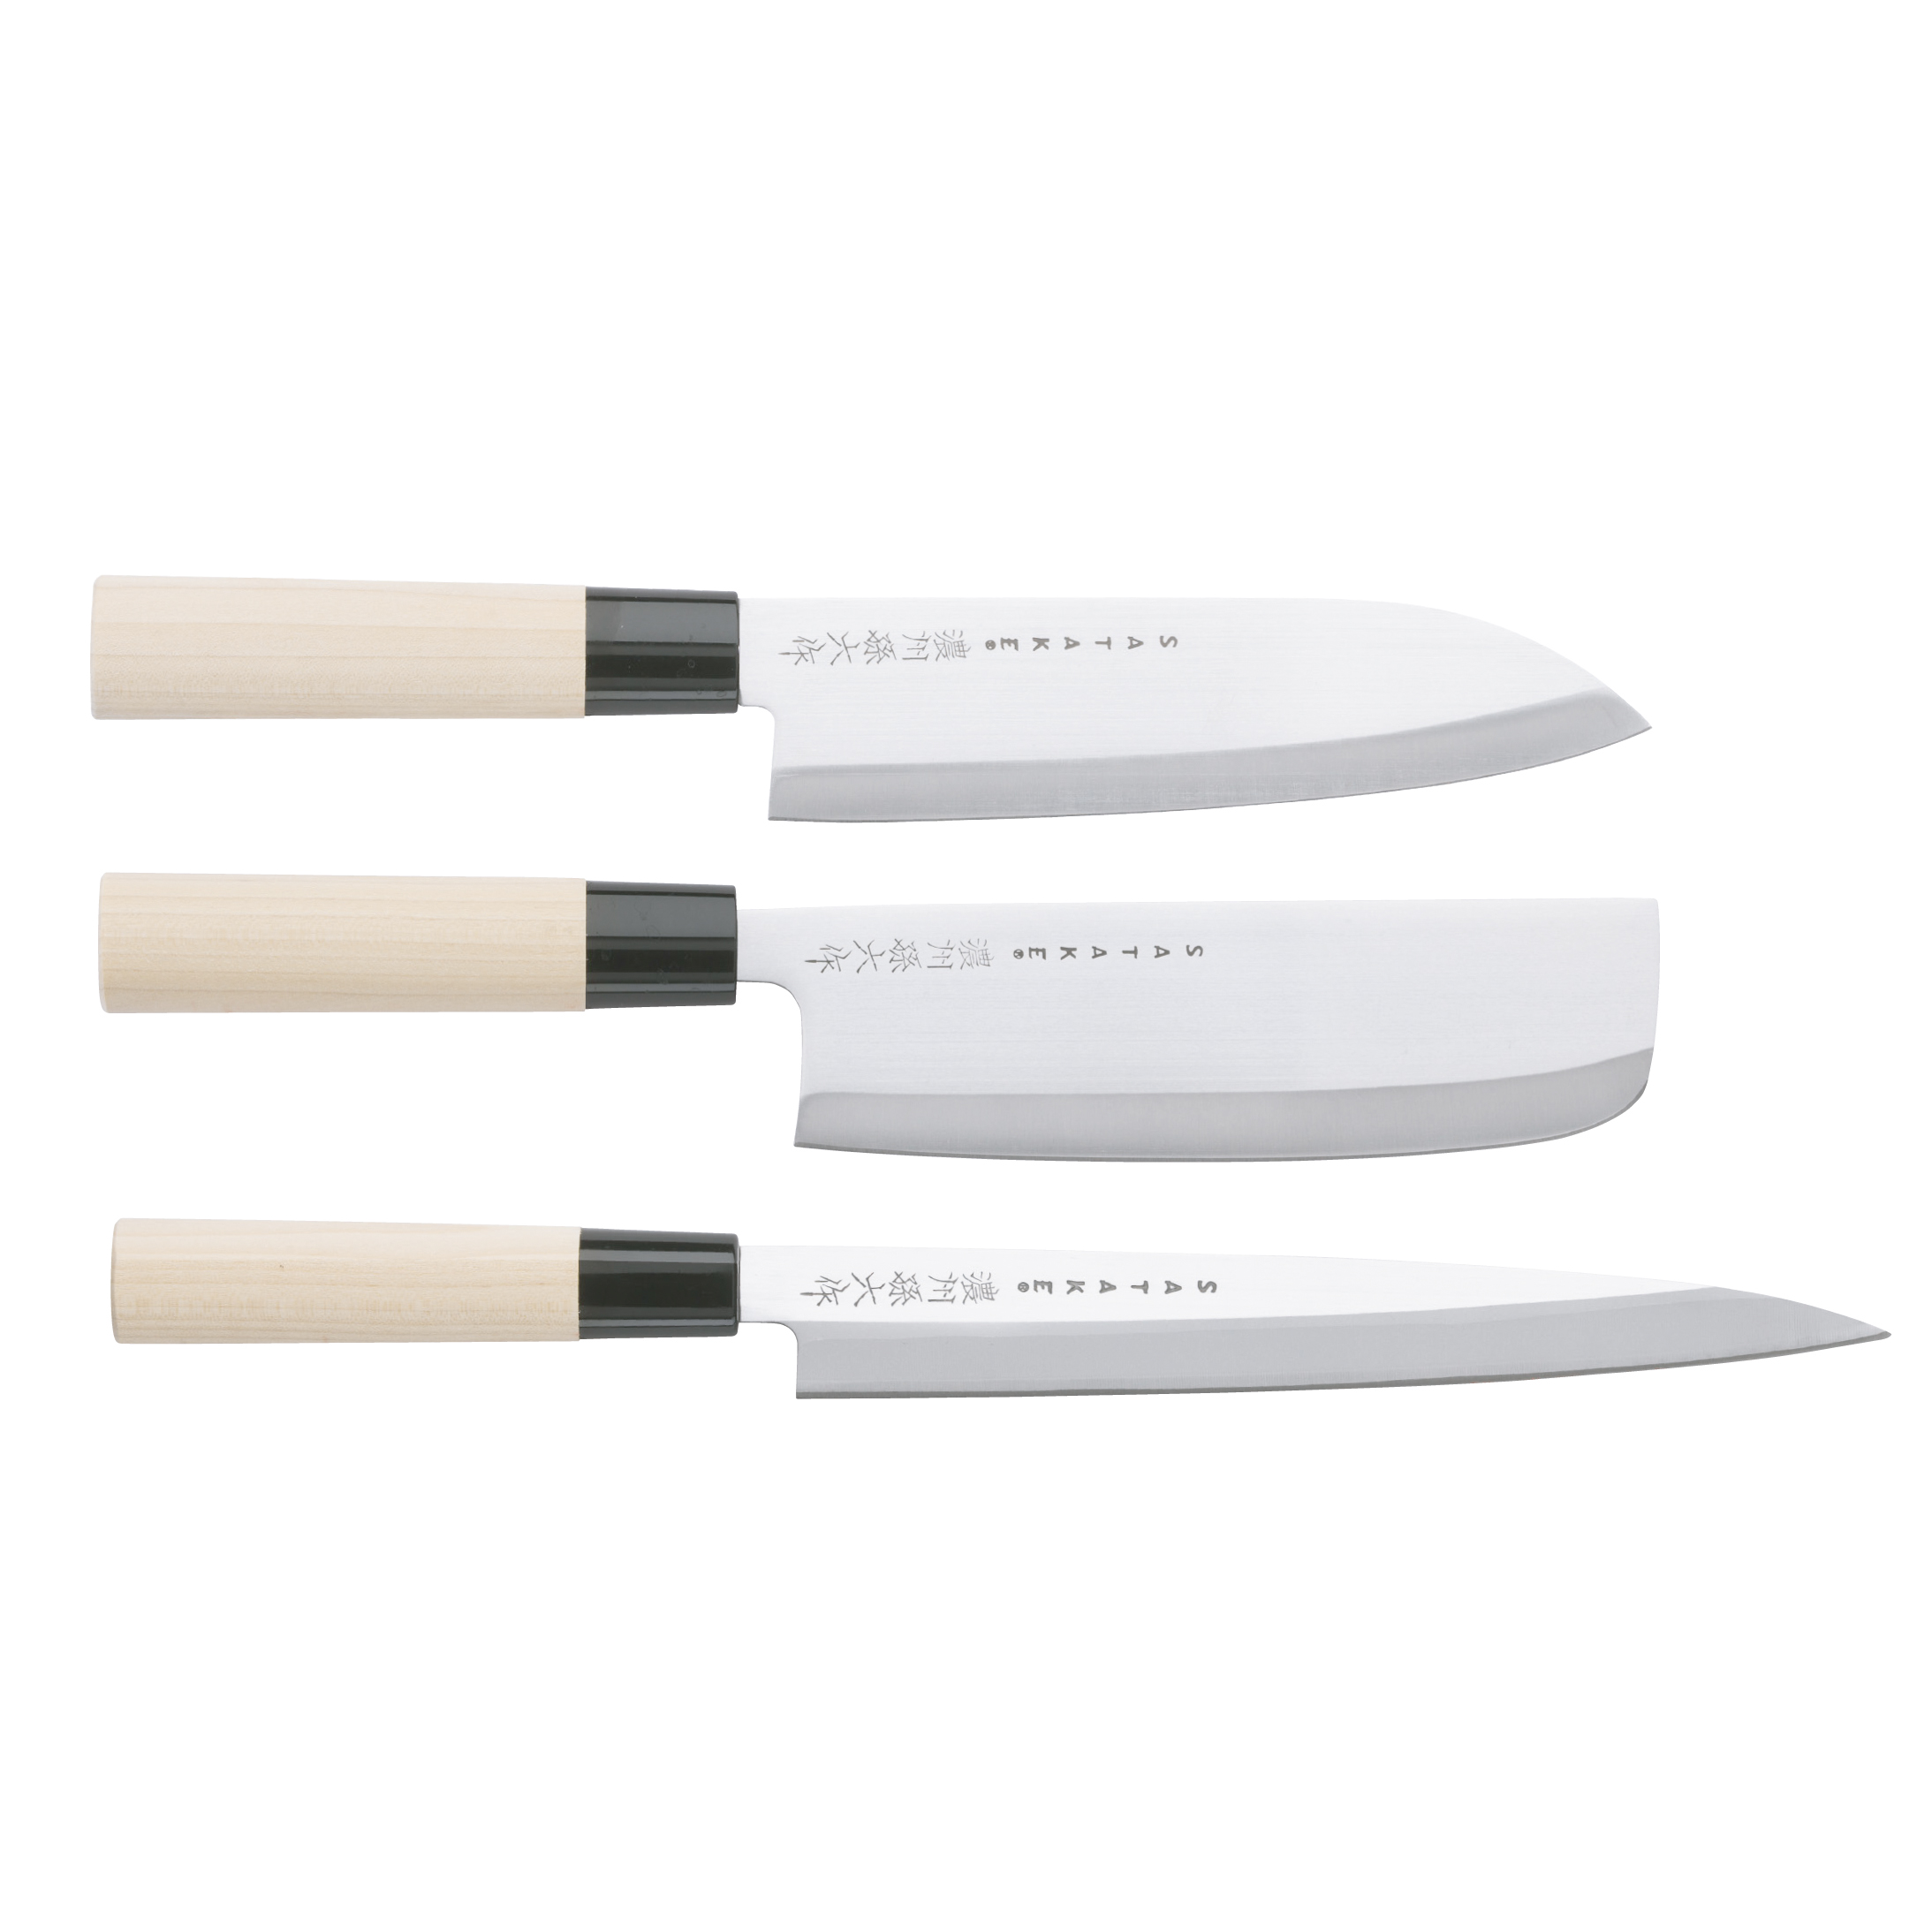 https://www.nordicnest.com/assets/blobs/satake-satake-houcho-knife-set-nakiri-sashimi-santoku-3-pieces/33930-01-01-51070c4320.jpg